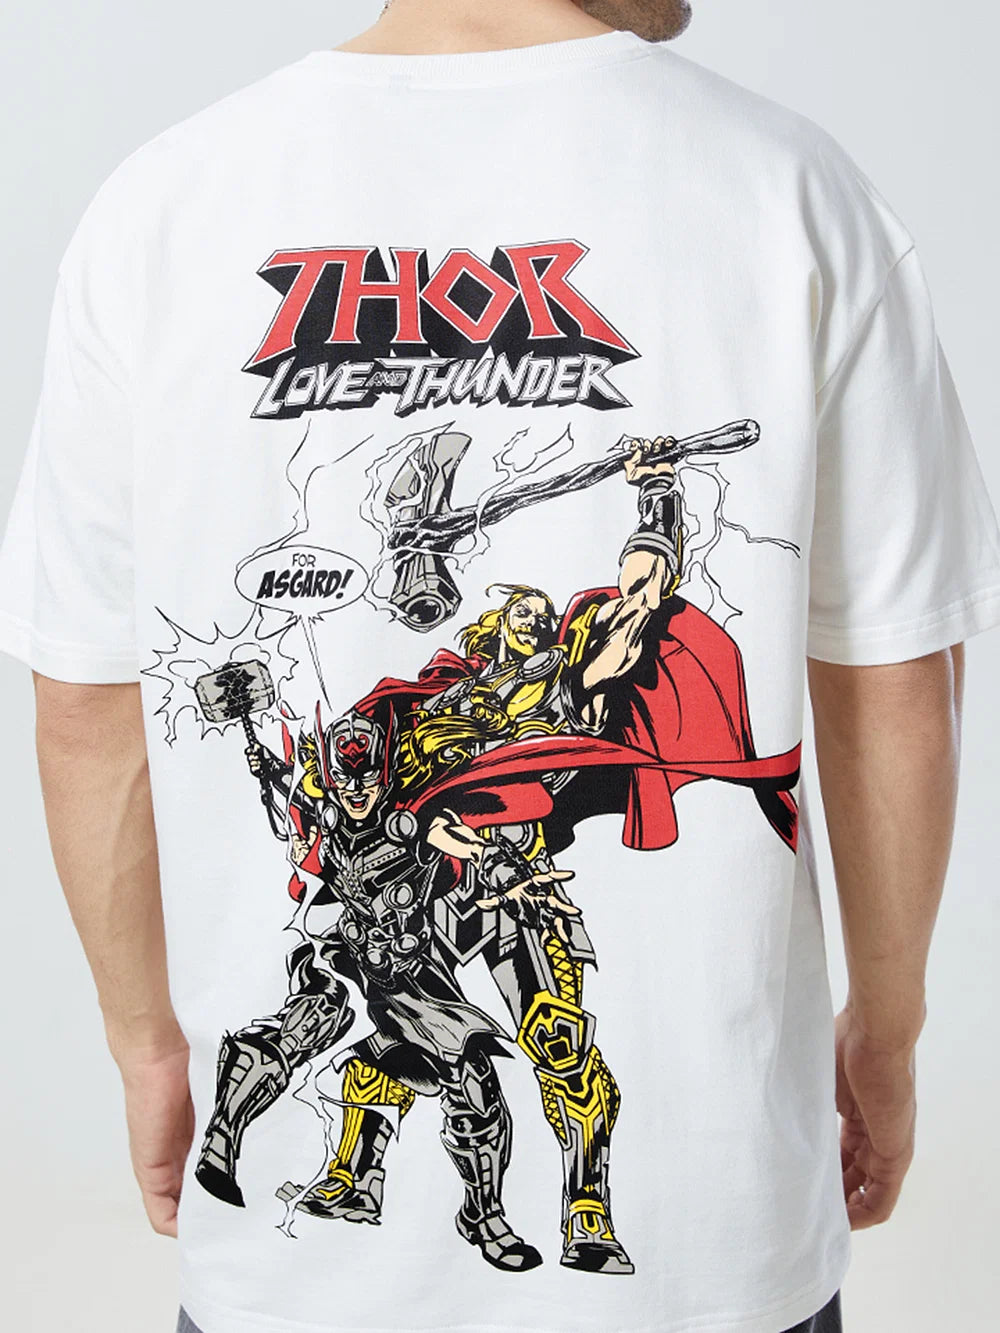 Thor Hammer (UK version)